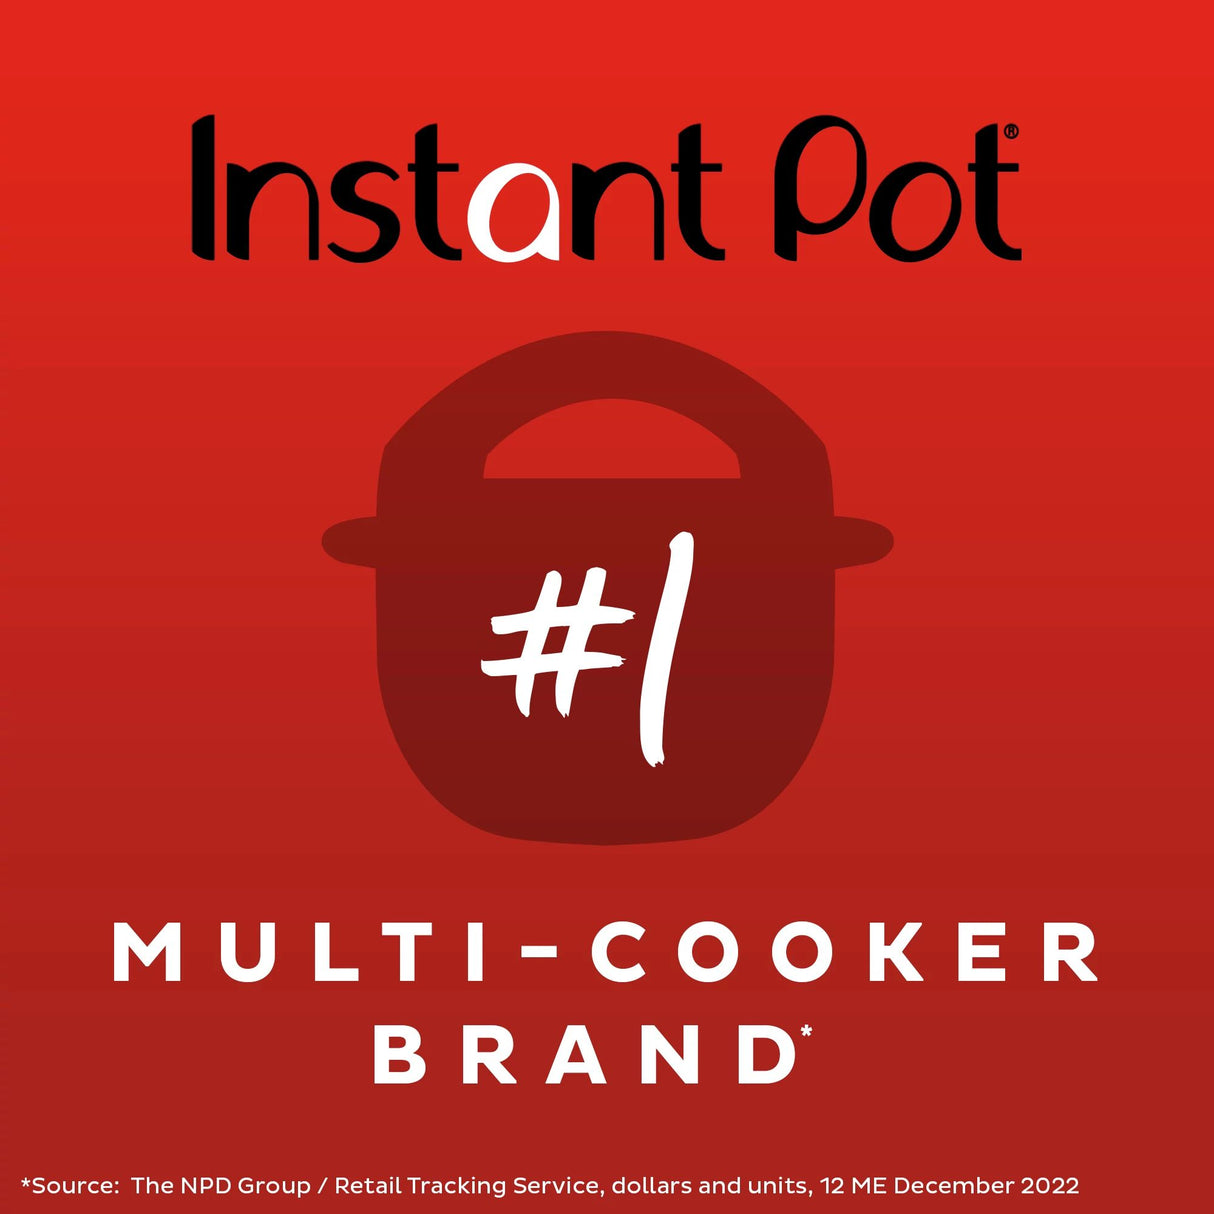  text: Instant Pot #1 Multi-cooker